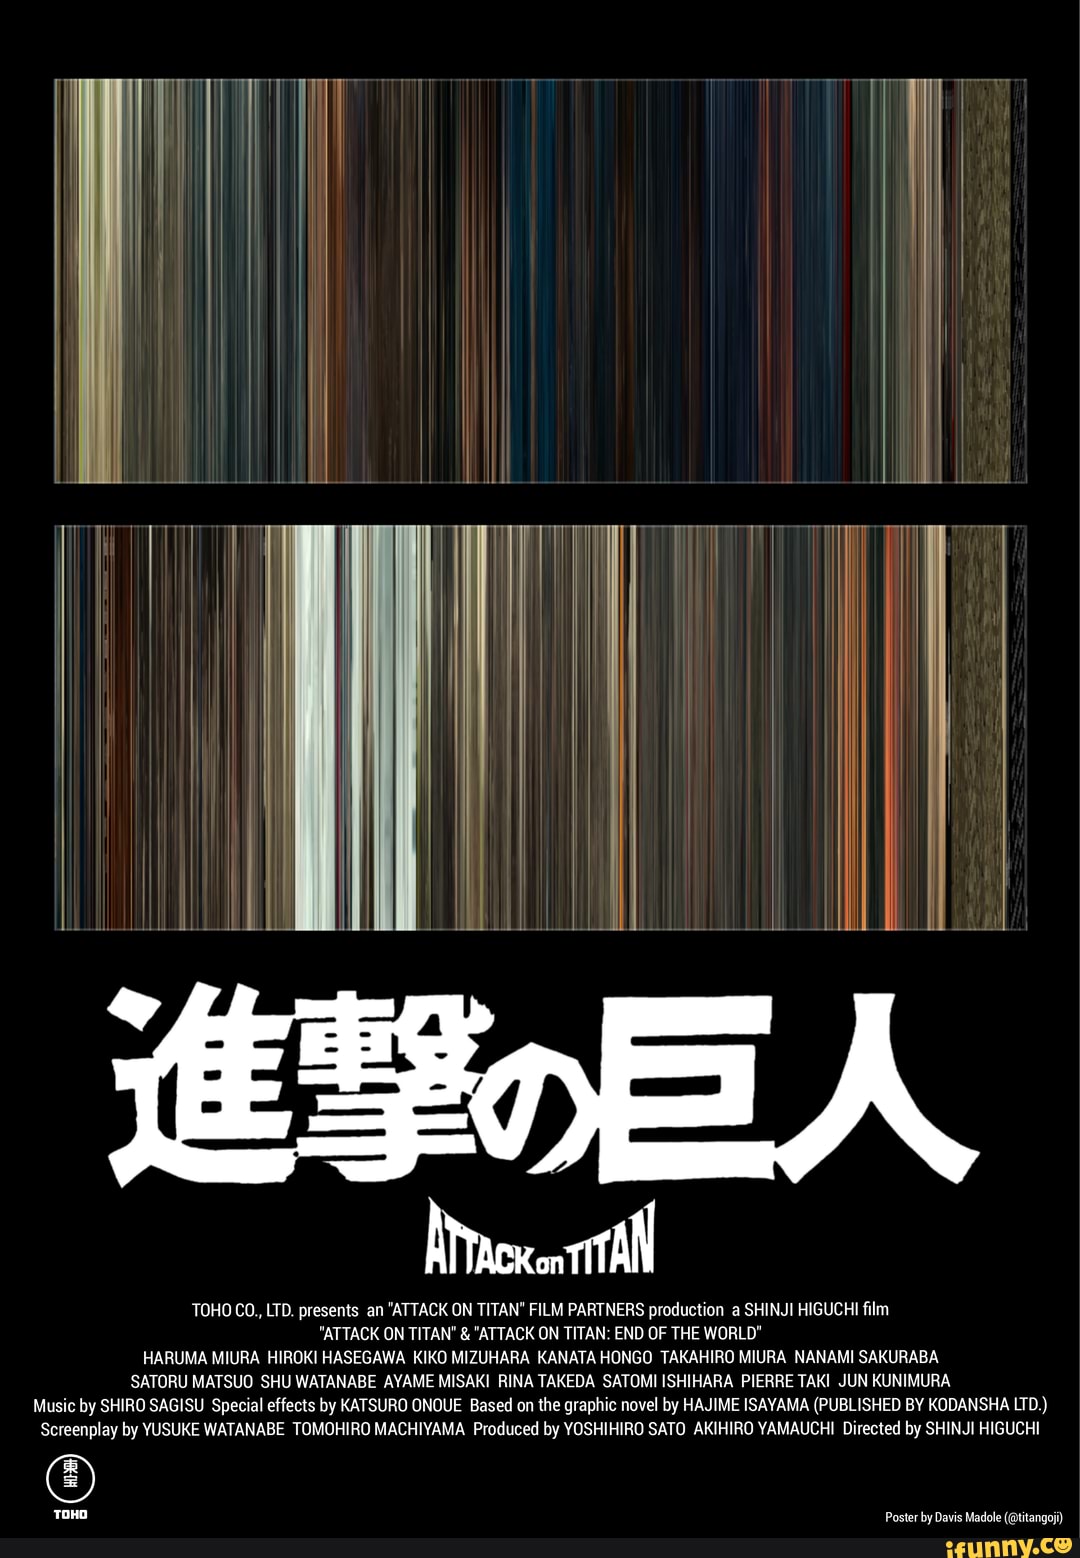  Attack on Titan - Film 1 - Steelbook [Limited Edition]:  7630017509697: Miura, Haruma, Ishihara, Satomi, Hongou, Kanata: Books